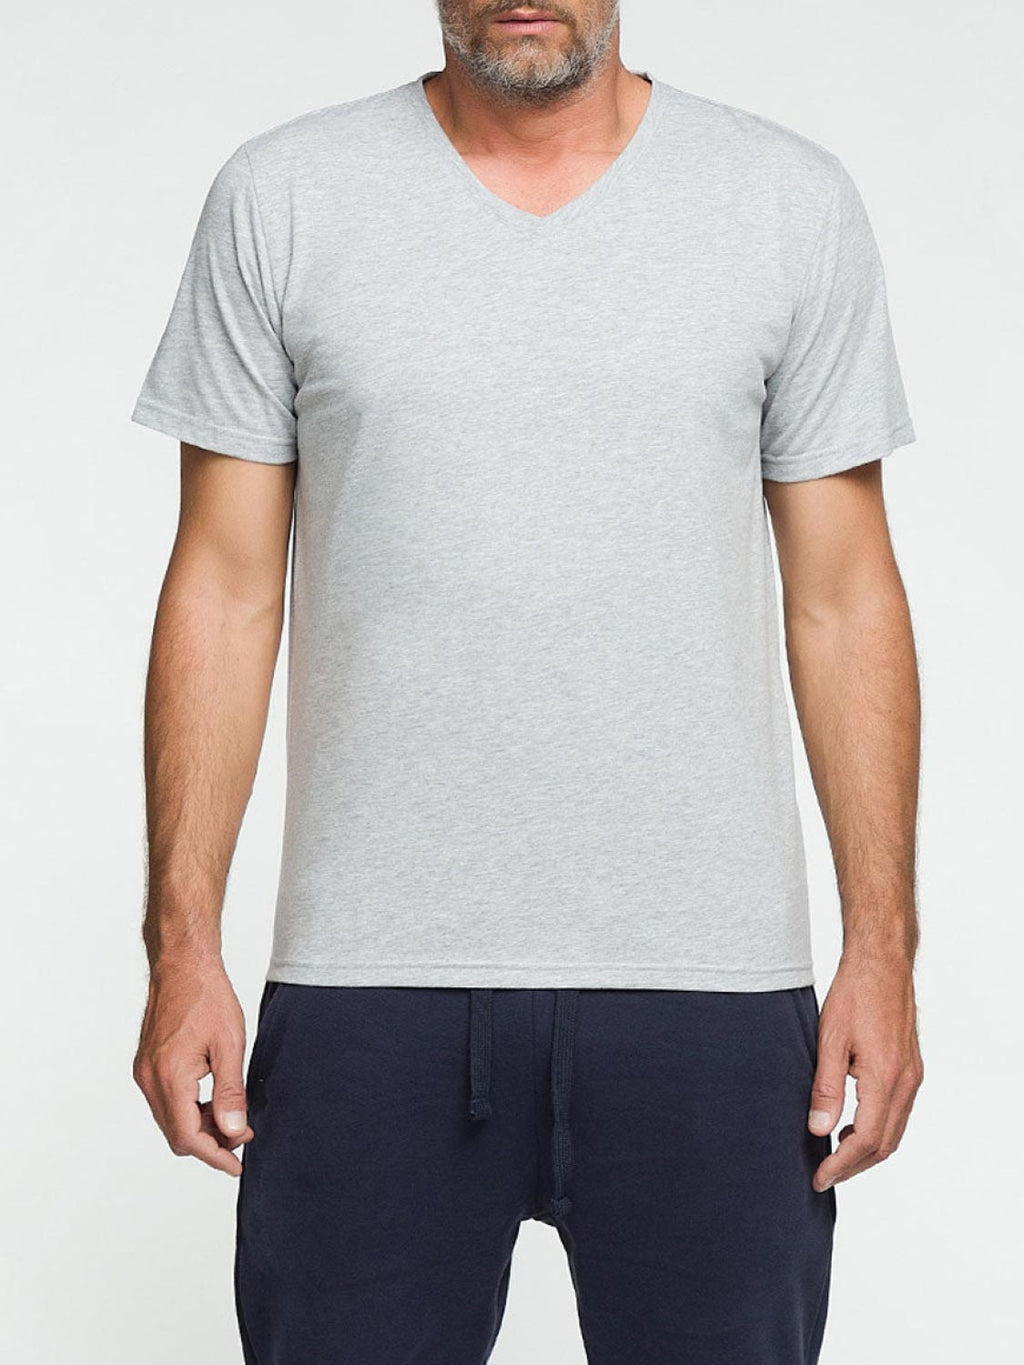 Men's Luxury T-shirts | Menswear | The Project Garments